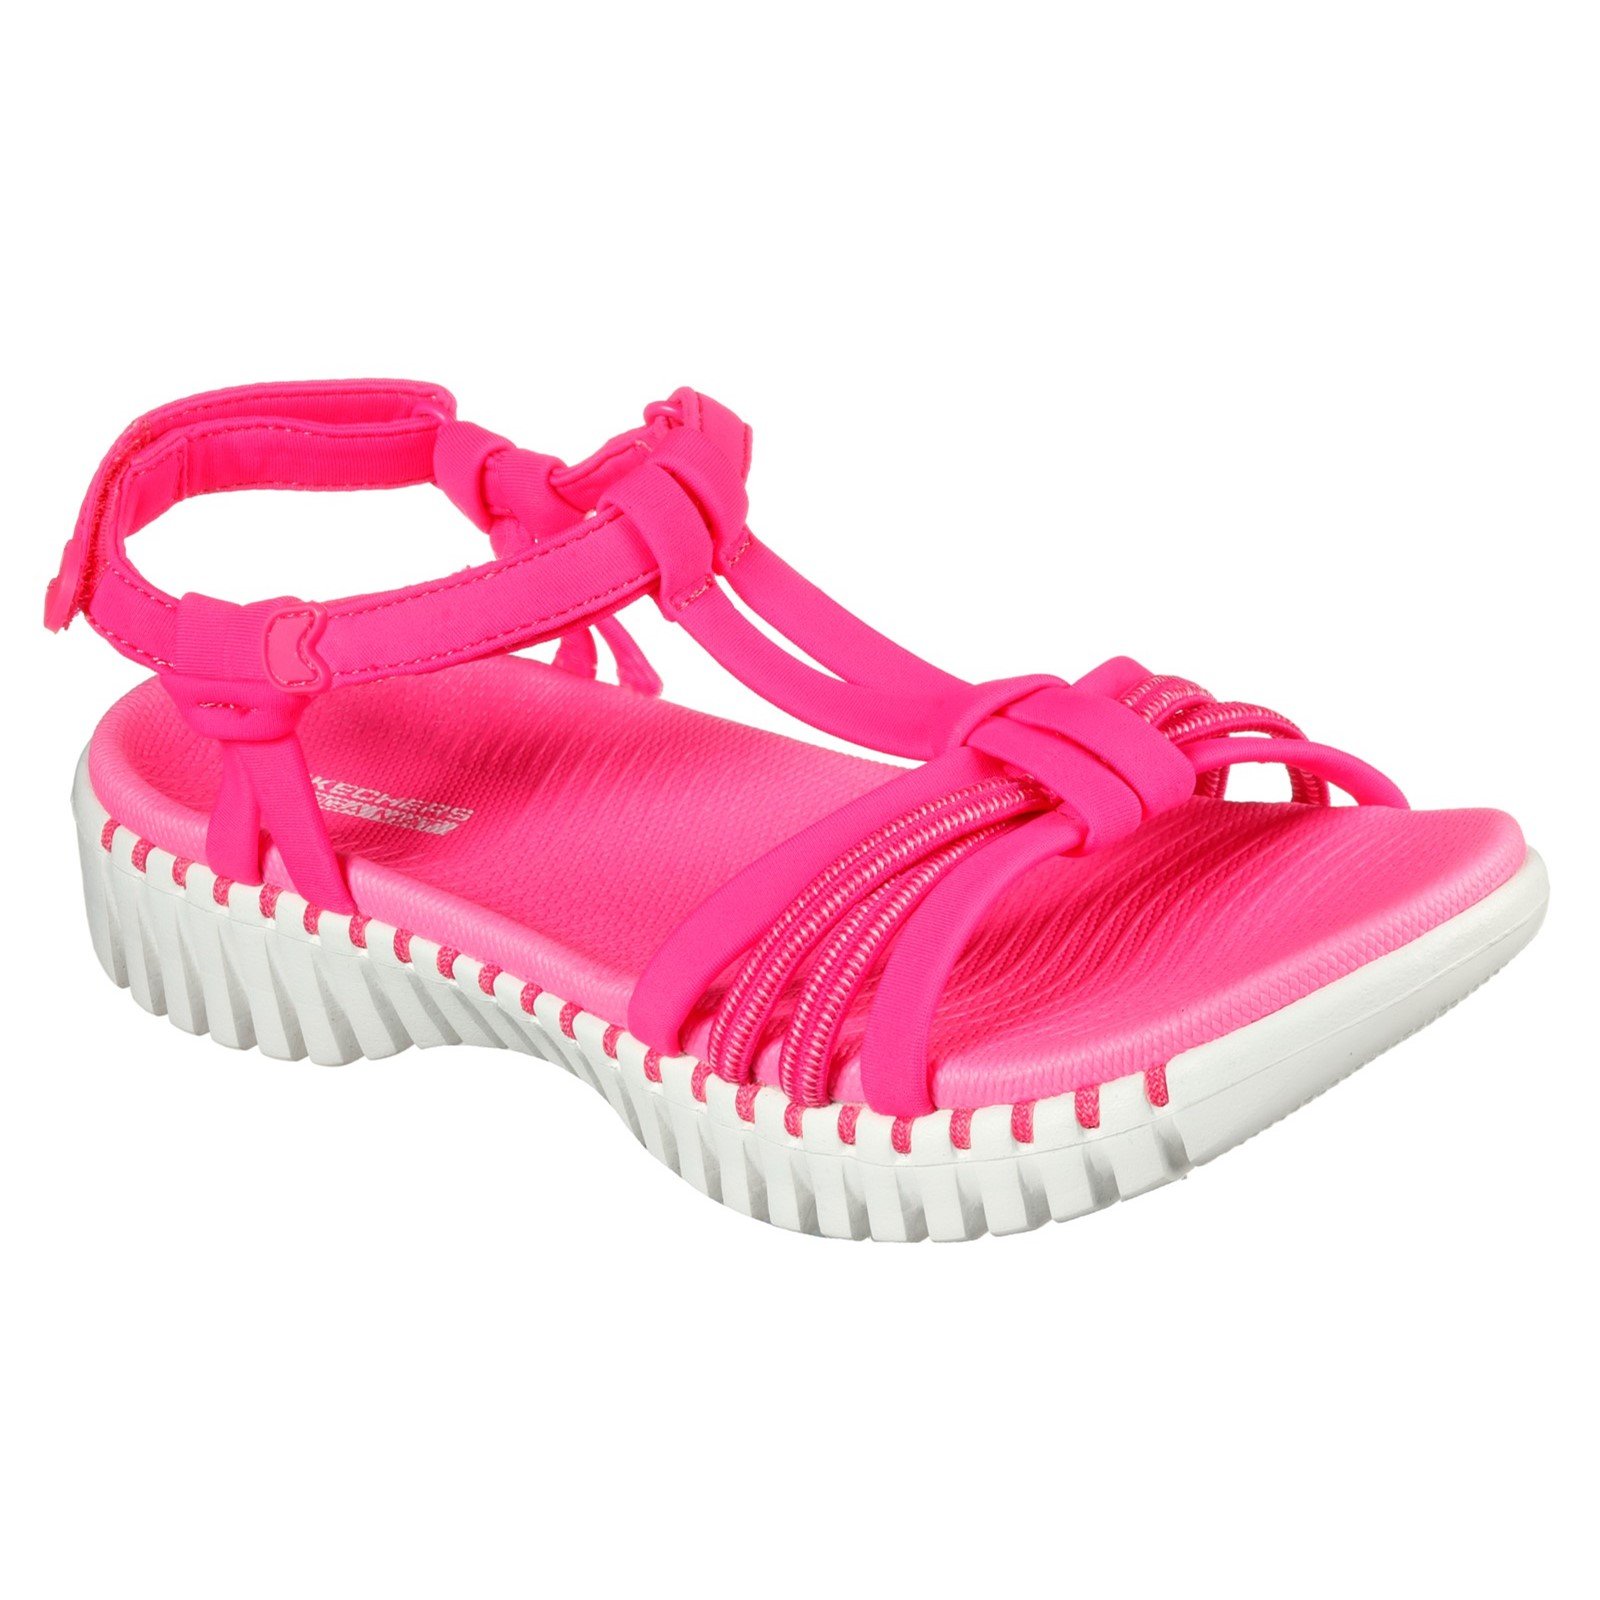 Skechers Women's Go Walk Smart Summer Sandal Various Colours 32156 - Pink 6